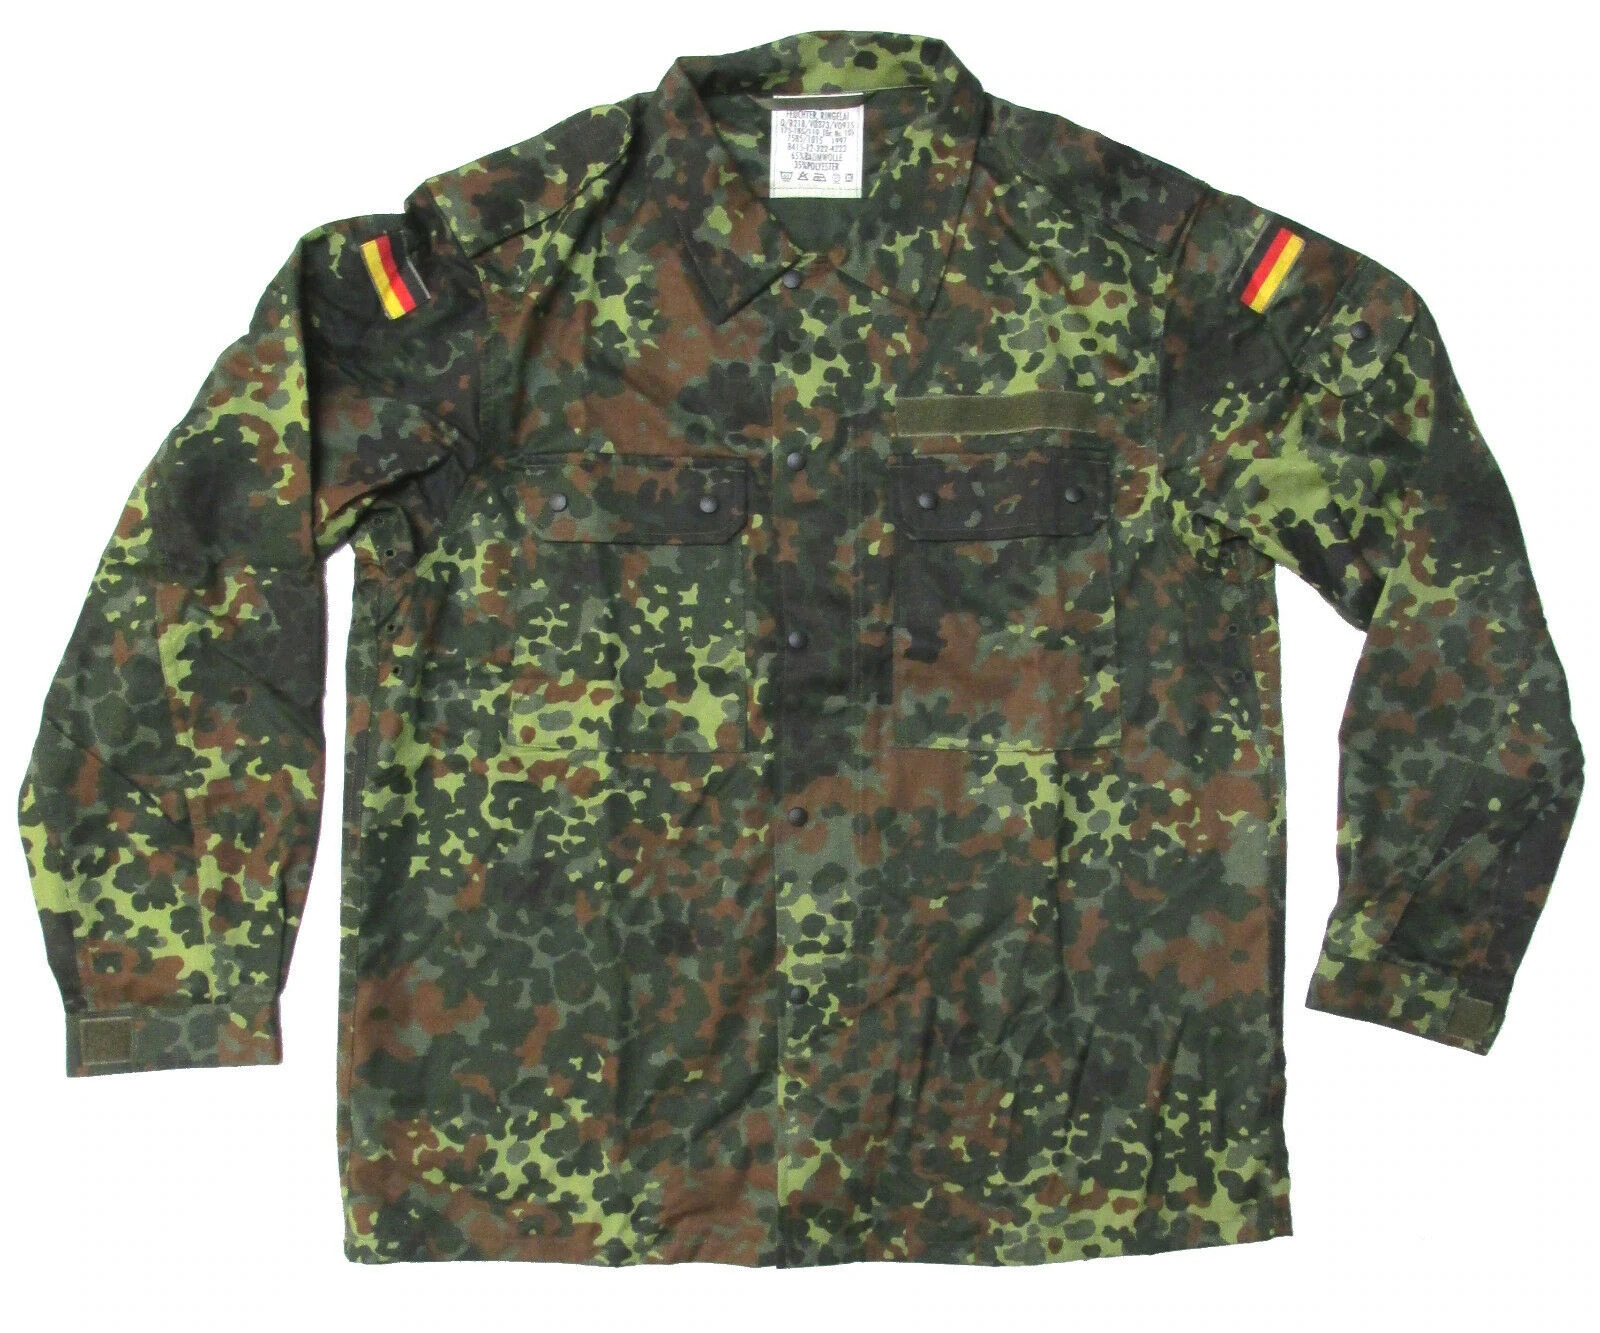 Flecktarn Camouflage German Army Shirt/Jacket - NEW Unissued - Size GR10